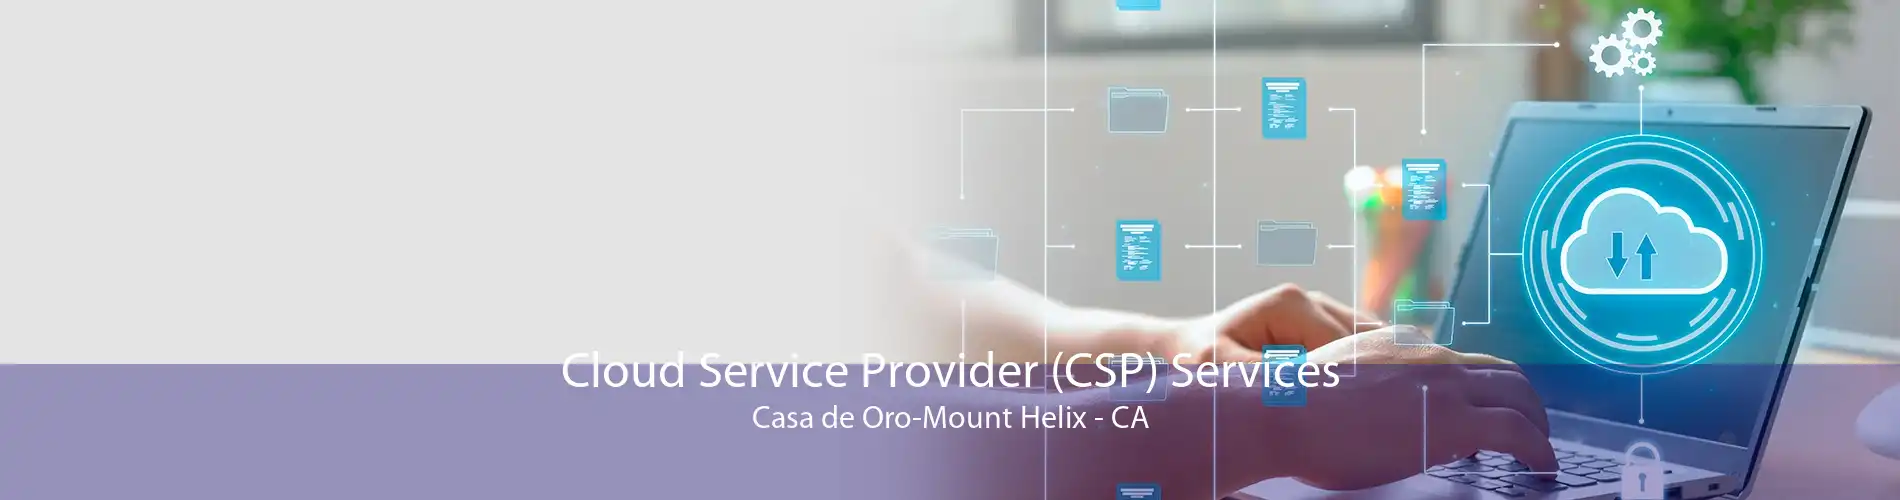 Cloud Service Provider (CSP) Services Casa de Oro-Mount Helix - CA